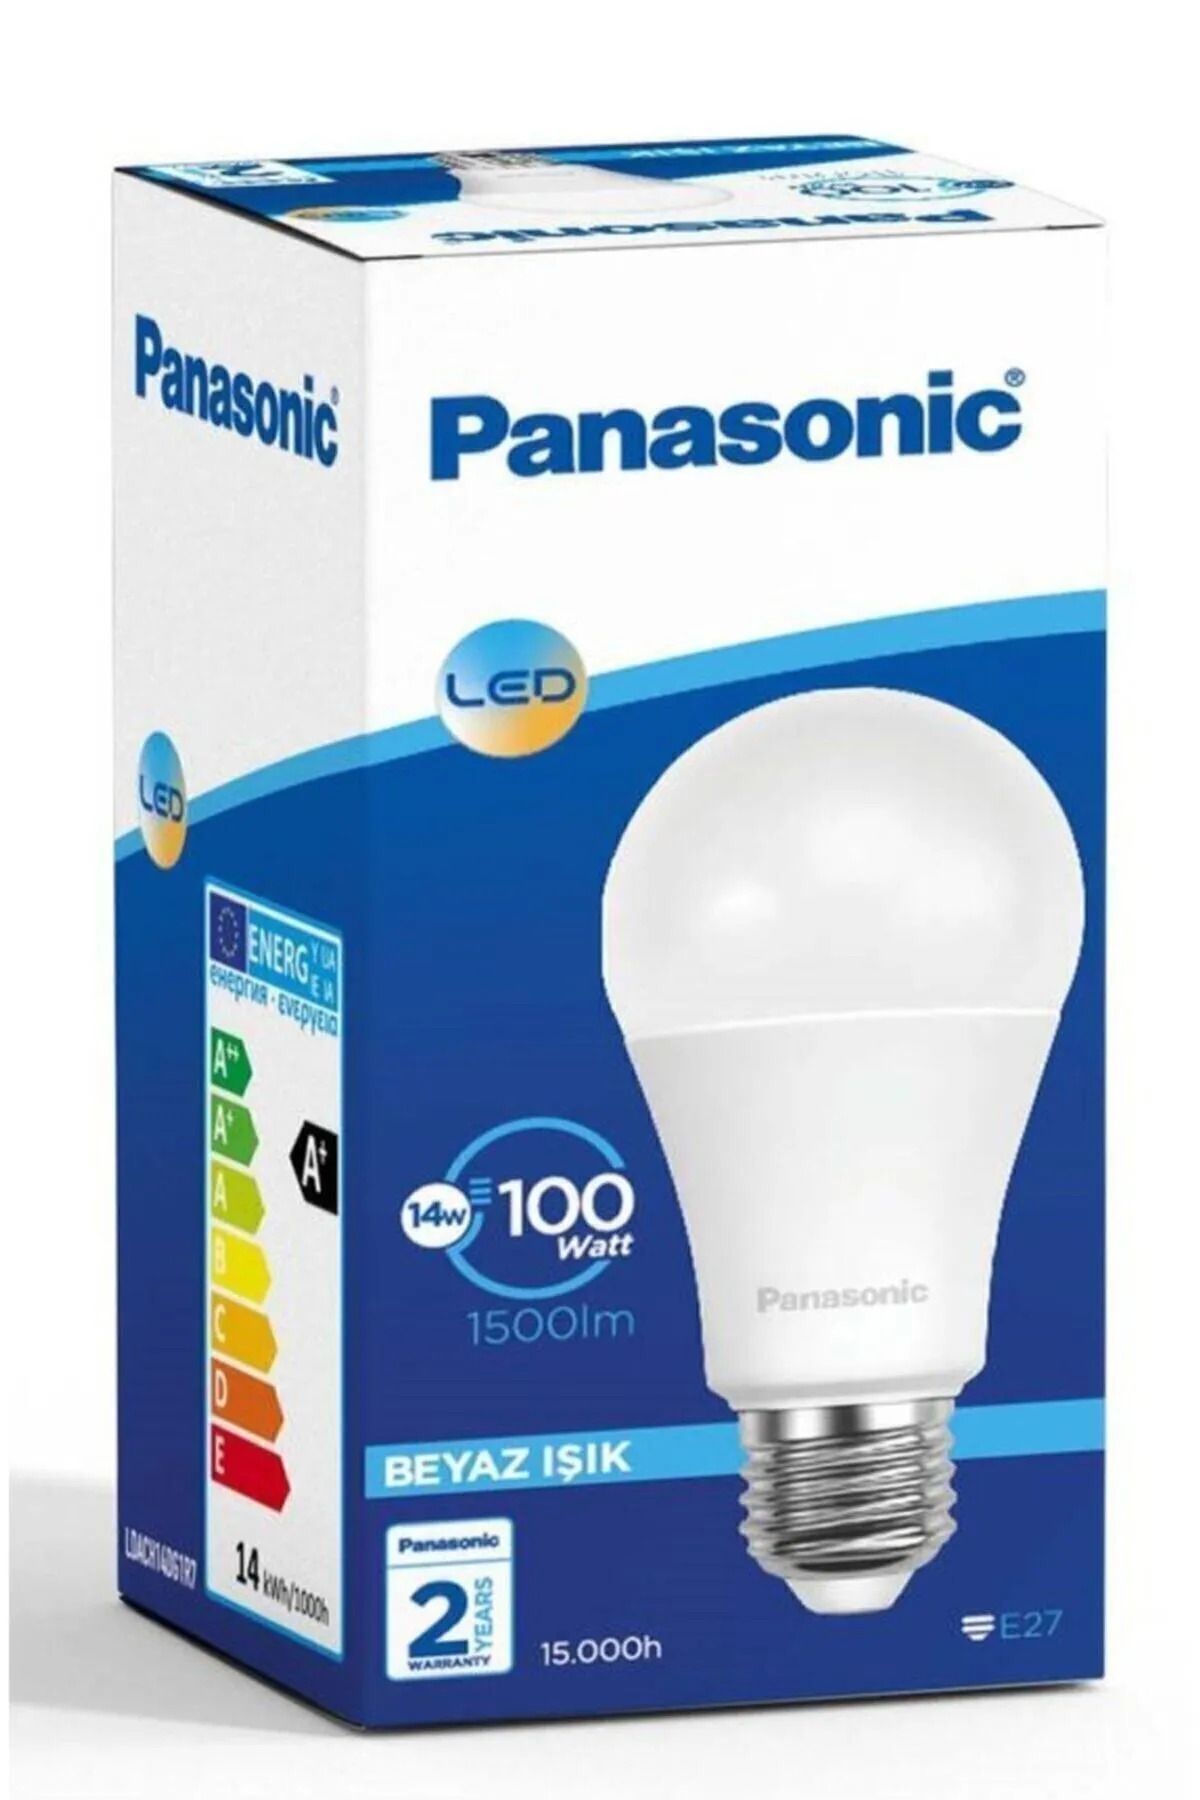 Panasonic Led Lamba 14w-100w E27 1500 Lümen Beyaz Işık A Enerji Sınıfı.